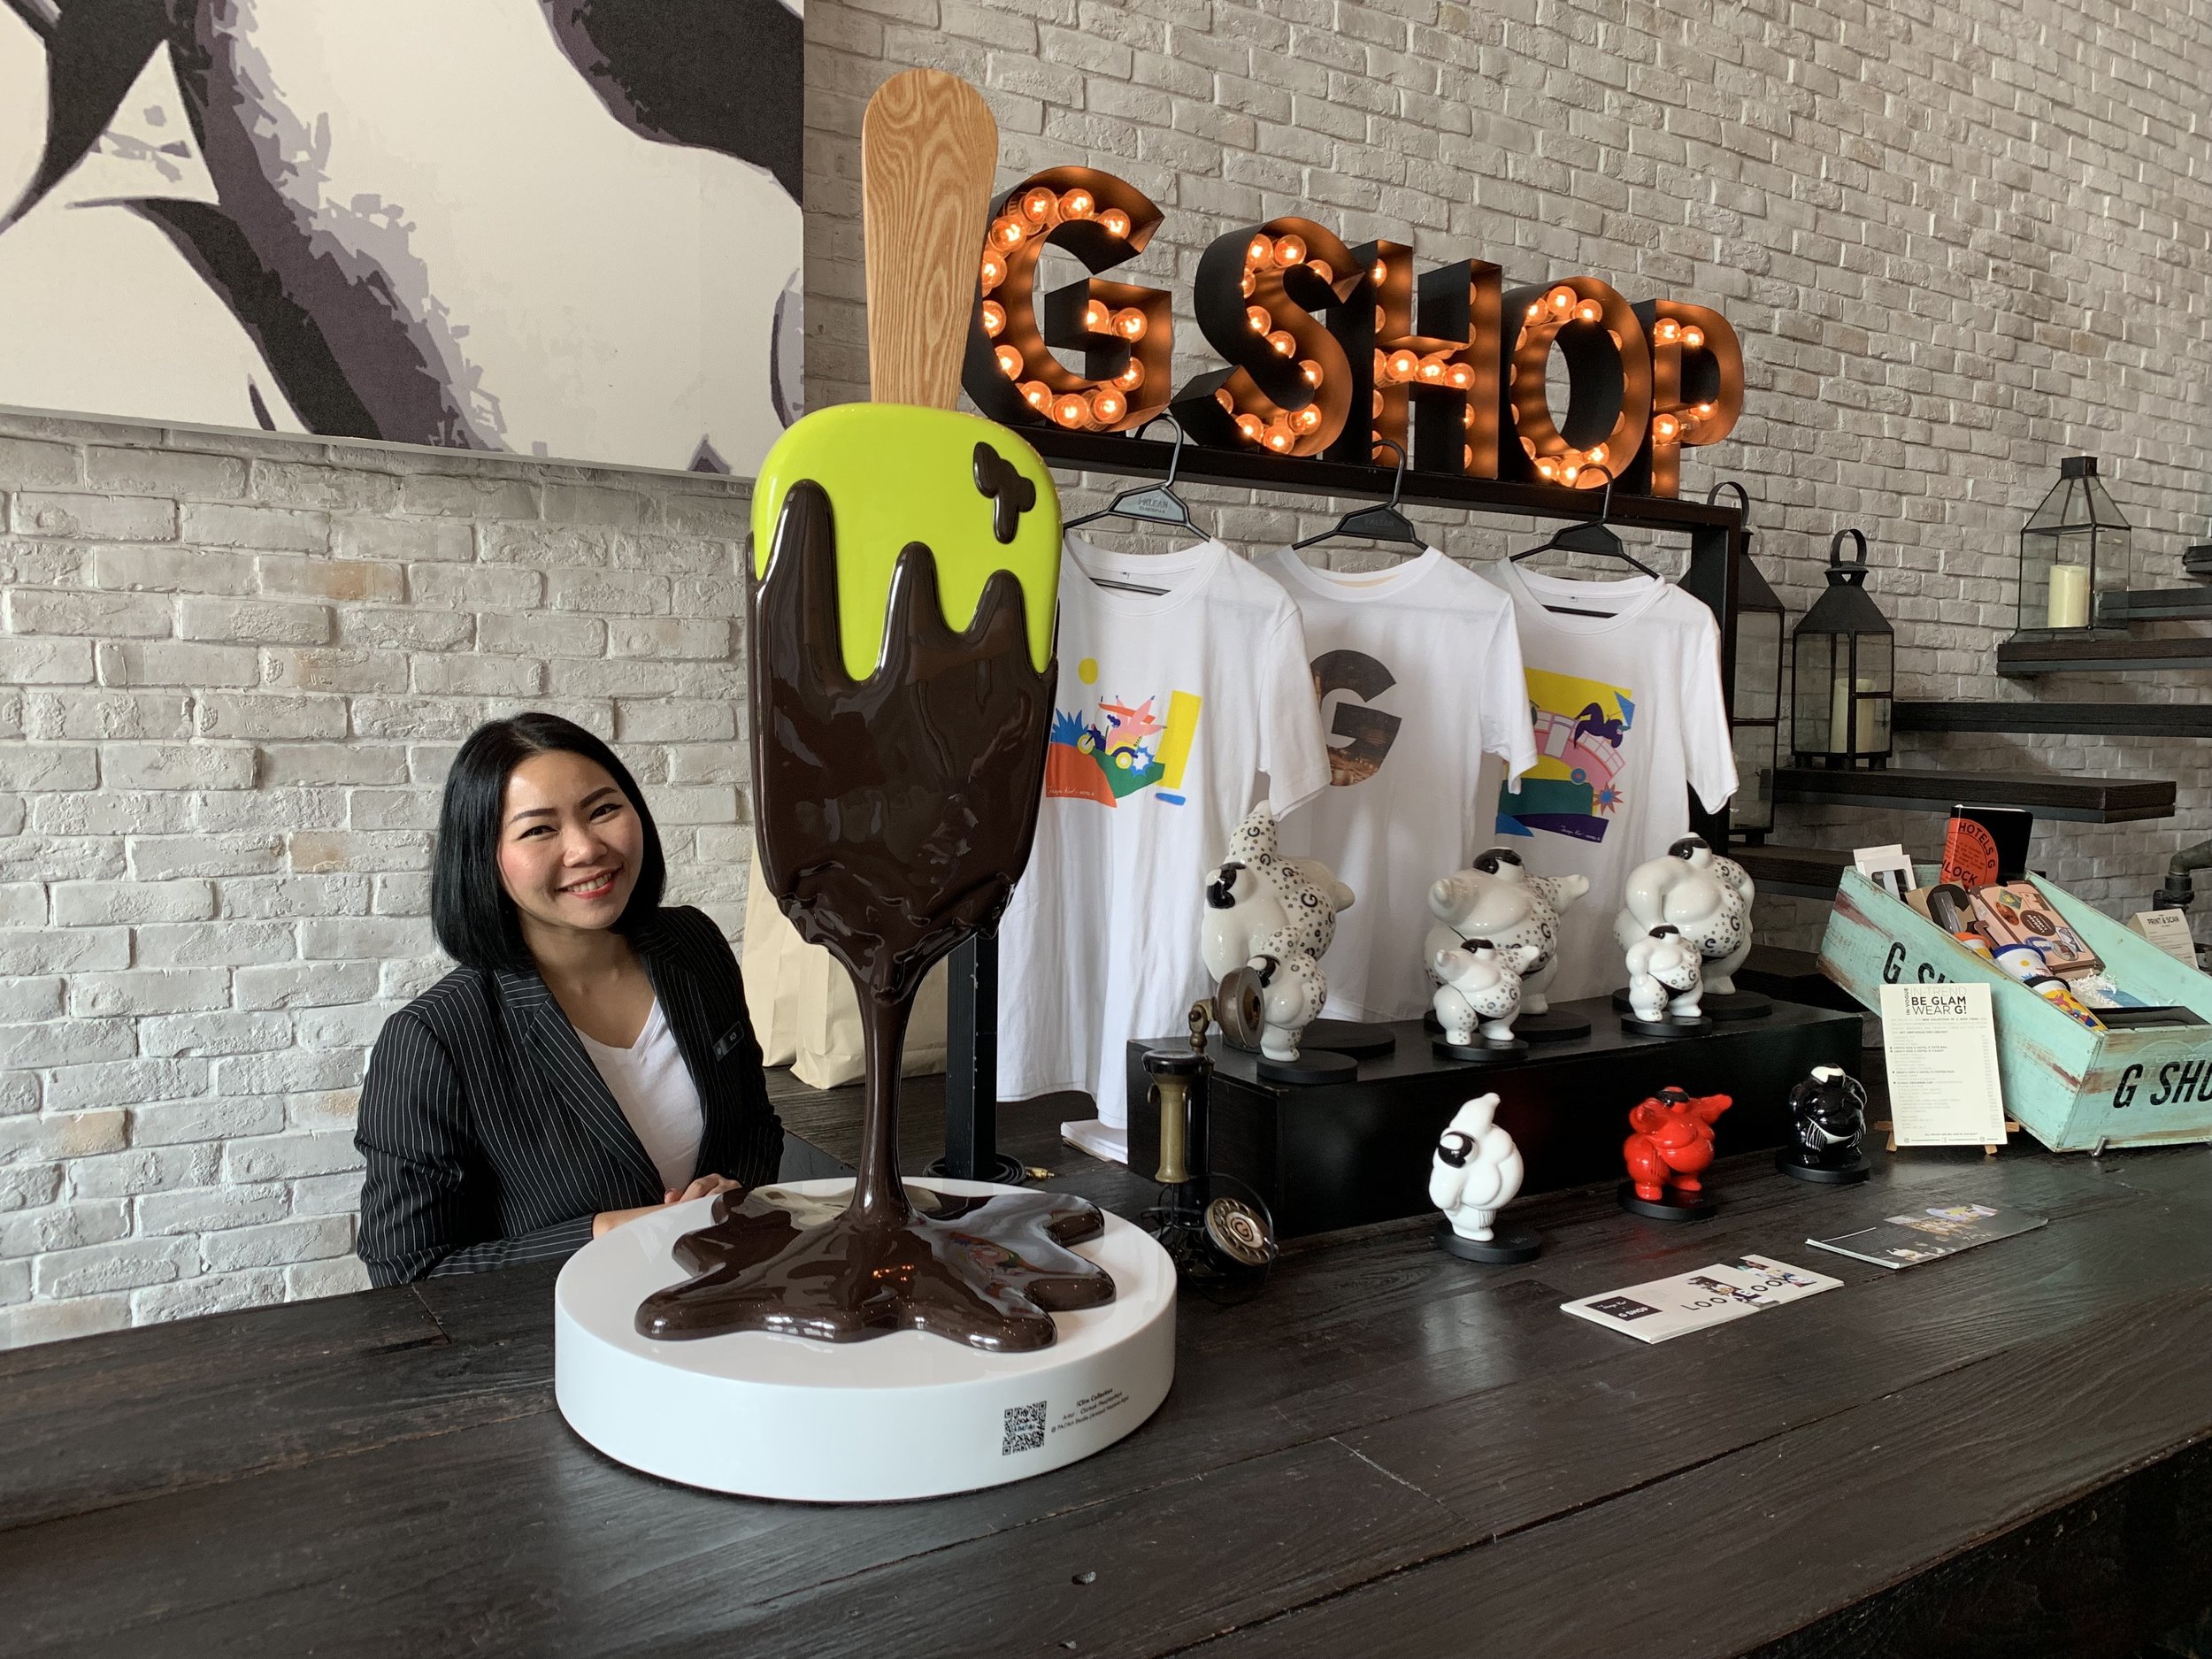 Pistachio chocolate ice cream pop art sculpture